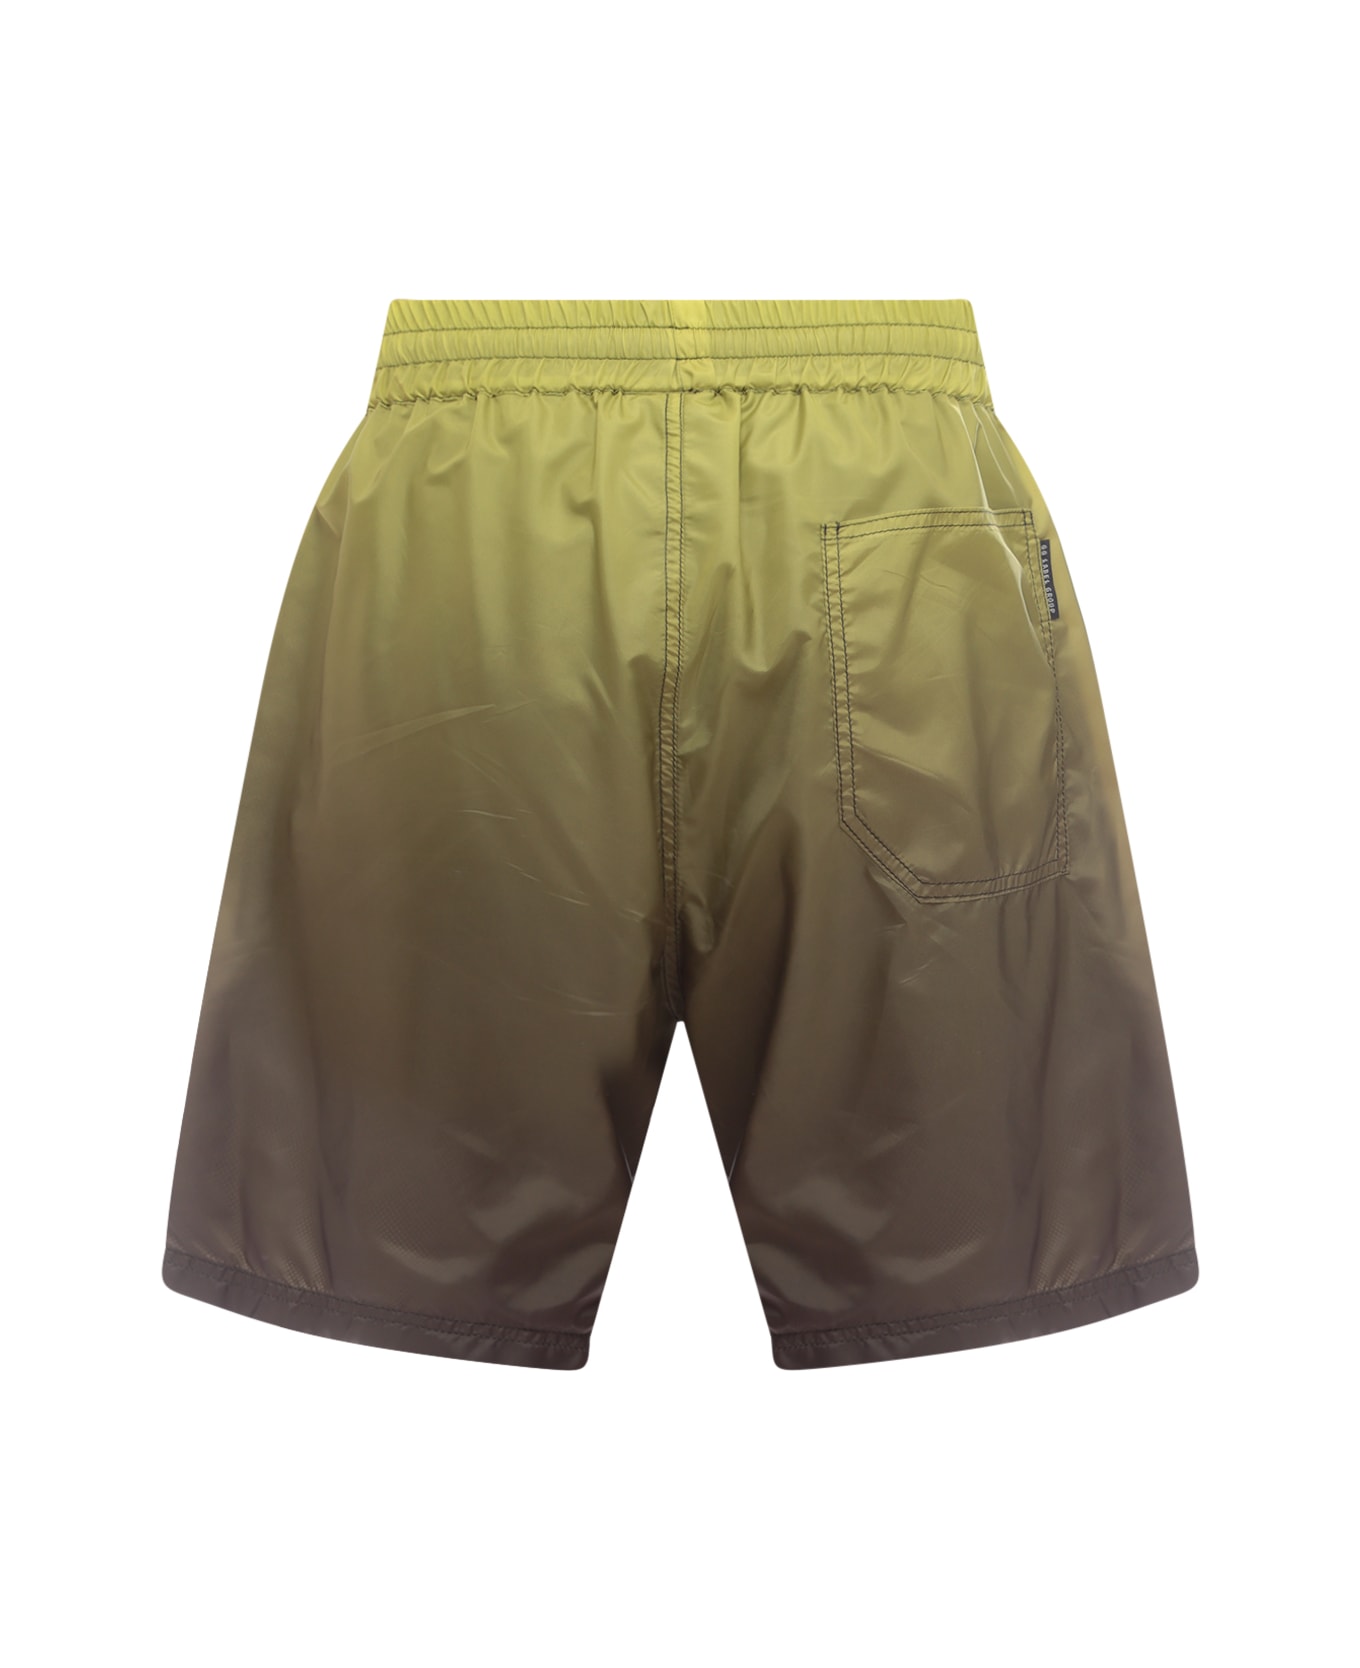 44 Label Group Bermuda Shorts - Green ショートパンツ